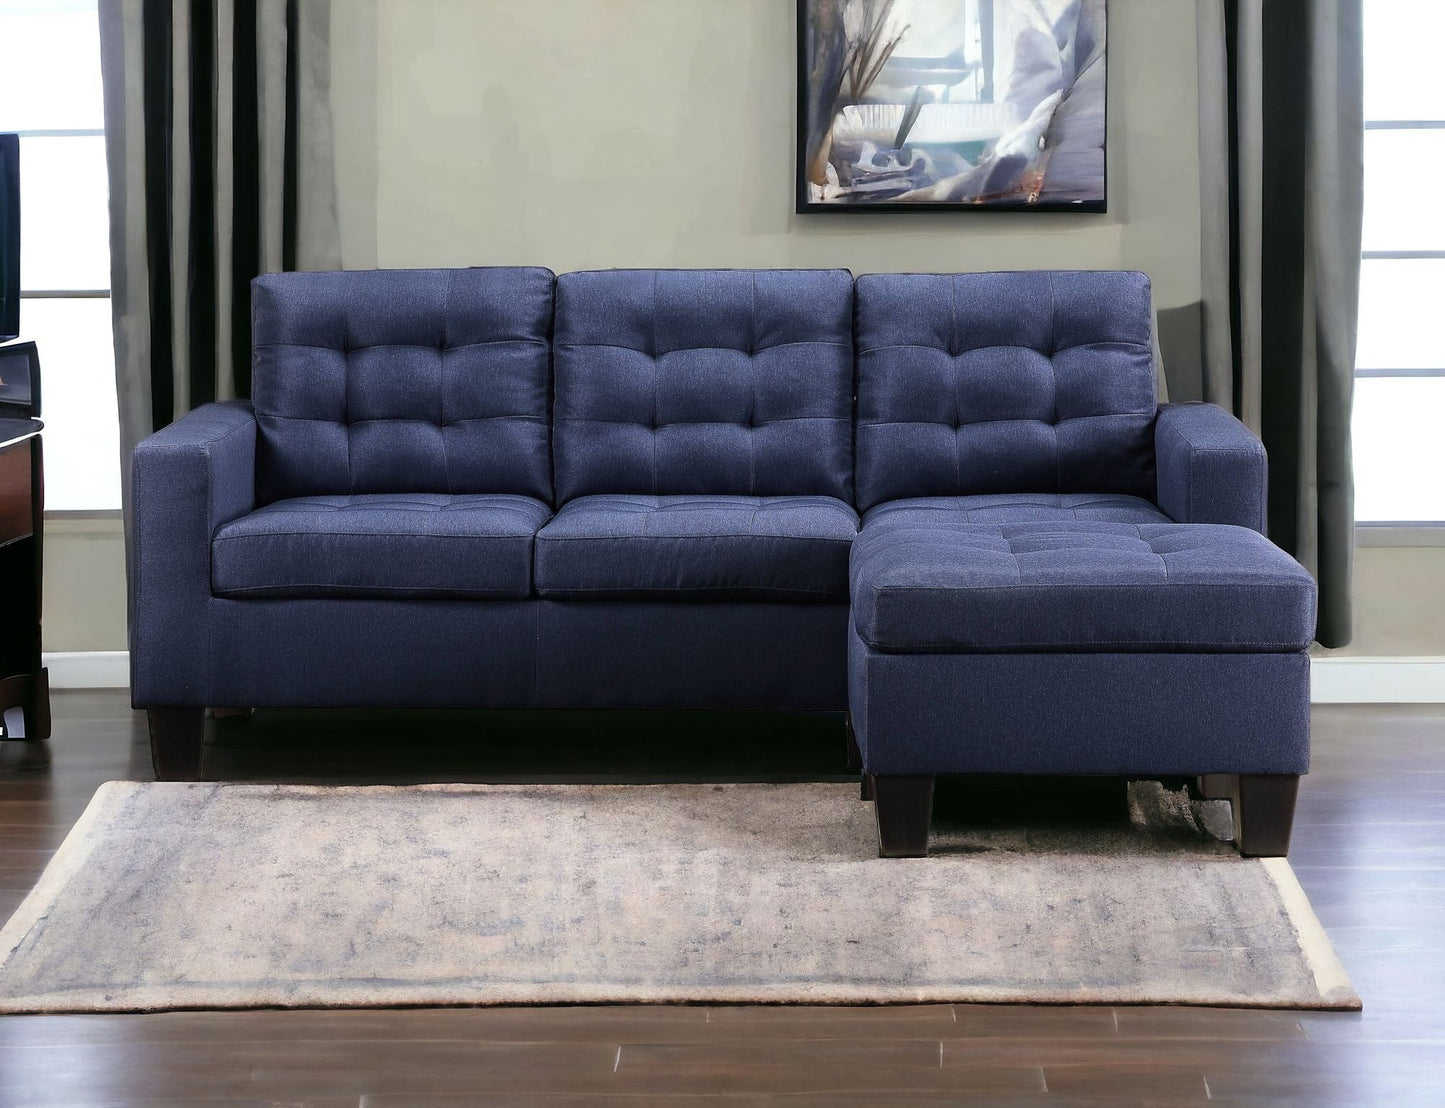 81" Blue Linen And Black Sofa